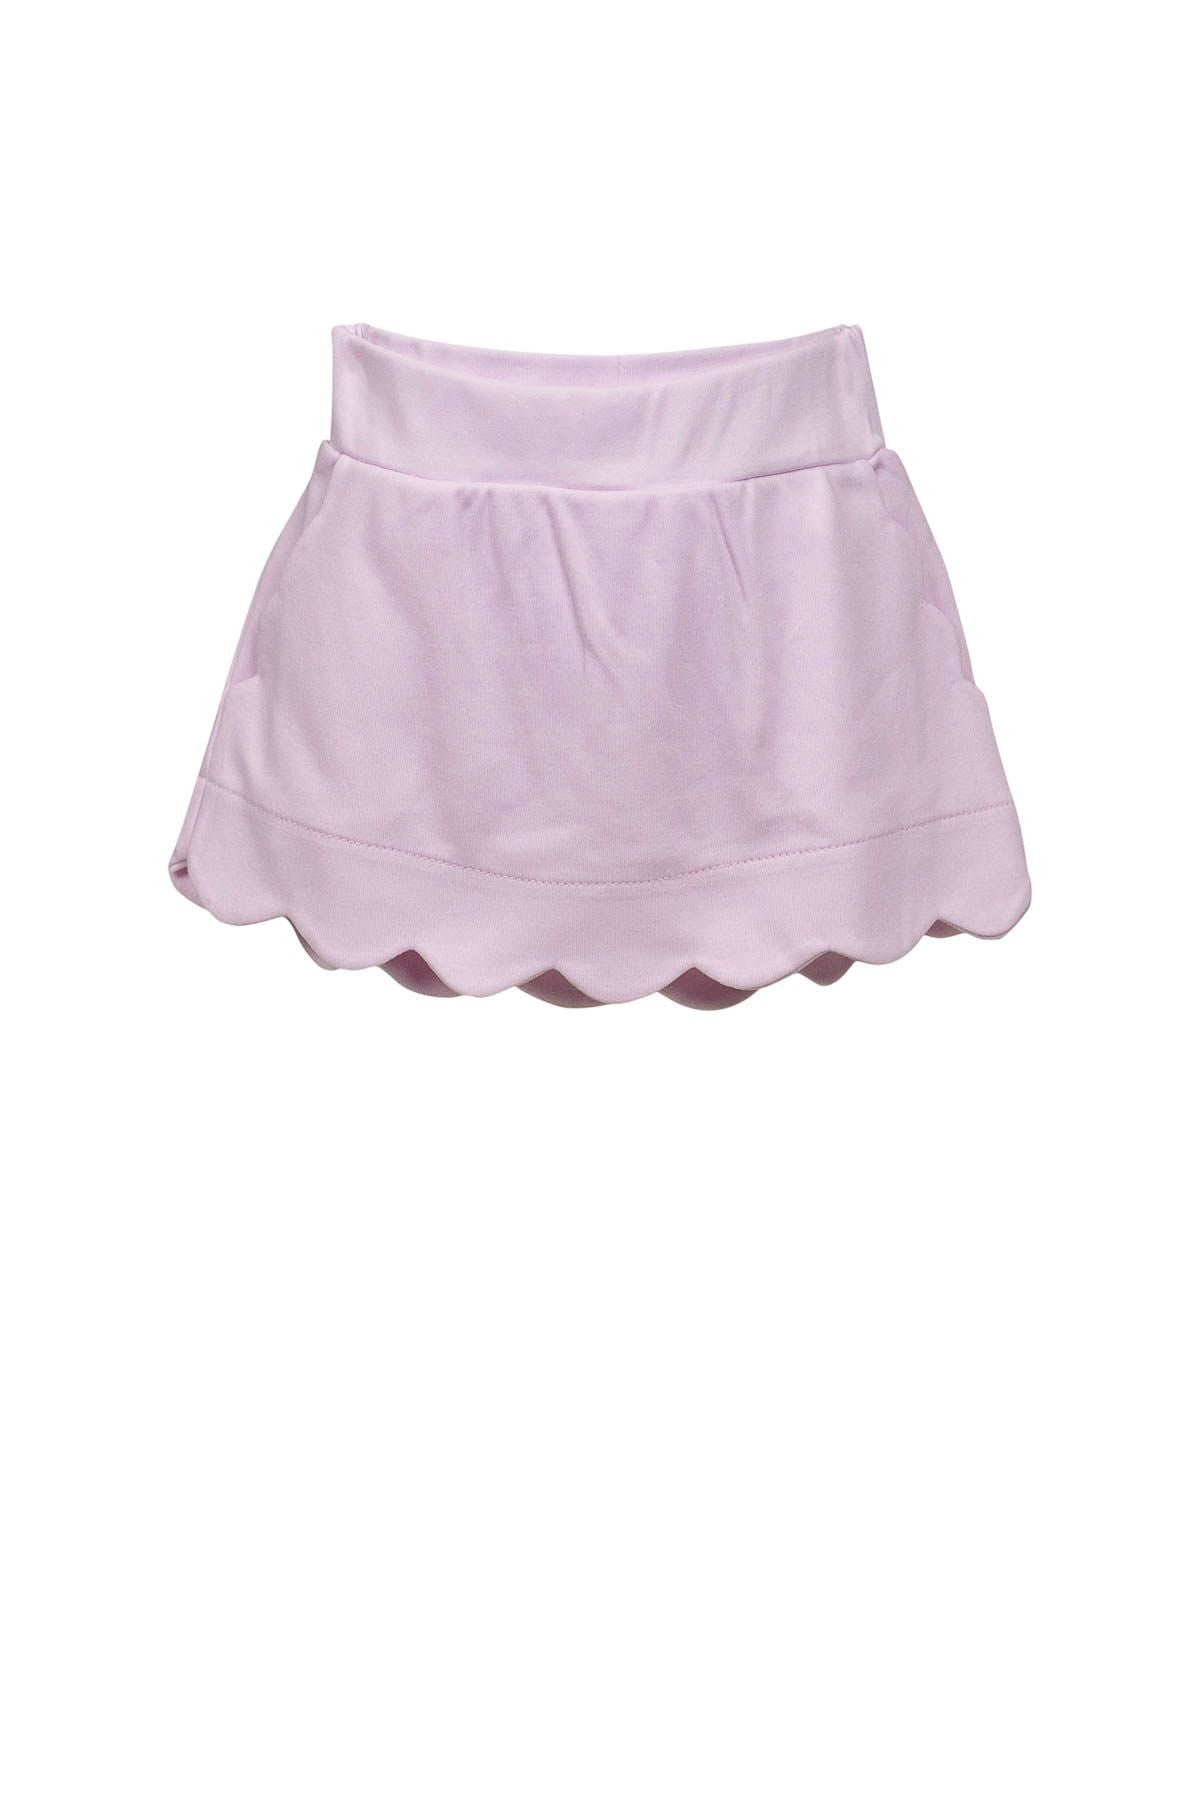 Proper Peony - Pink Scallop Skirt